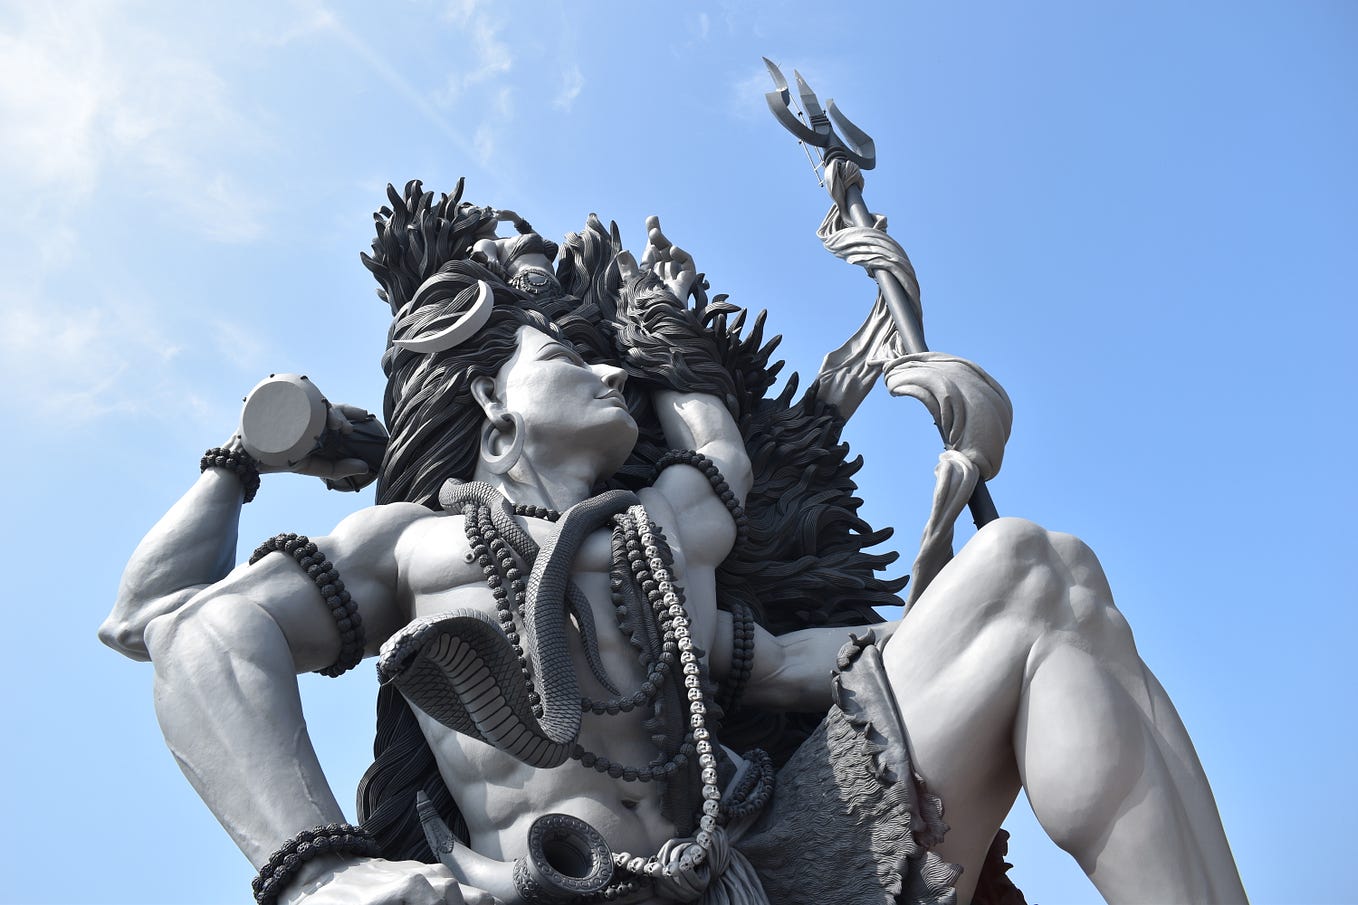 Why An Atheist Like Me Became The Shiva Worshiper?